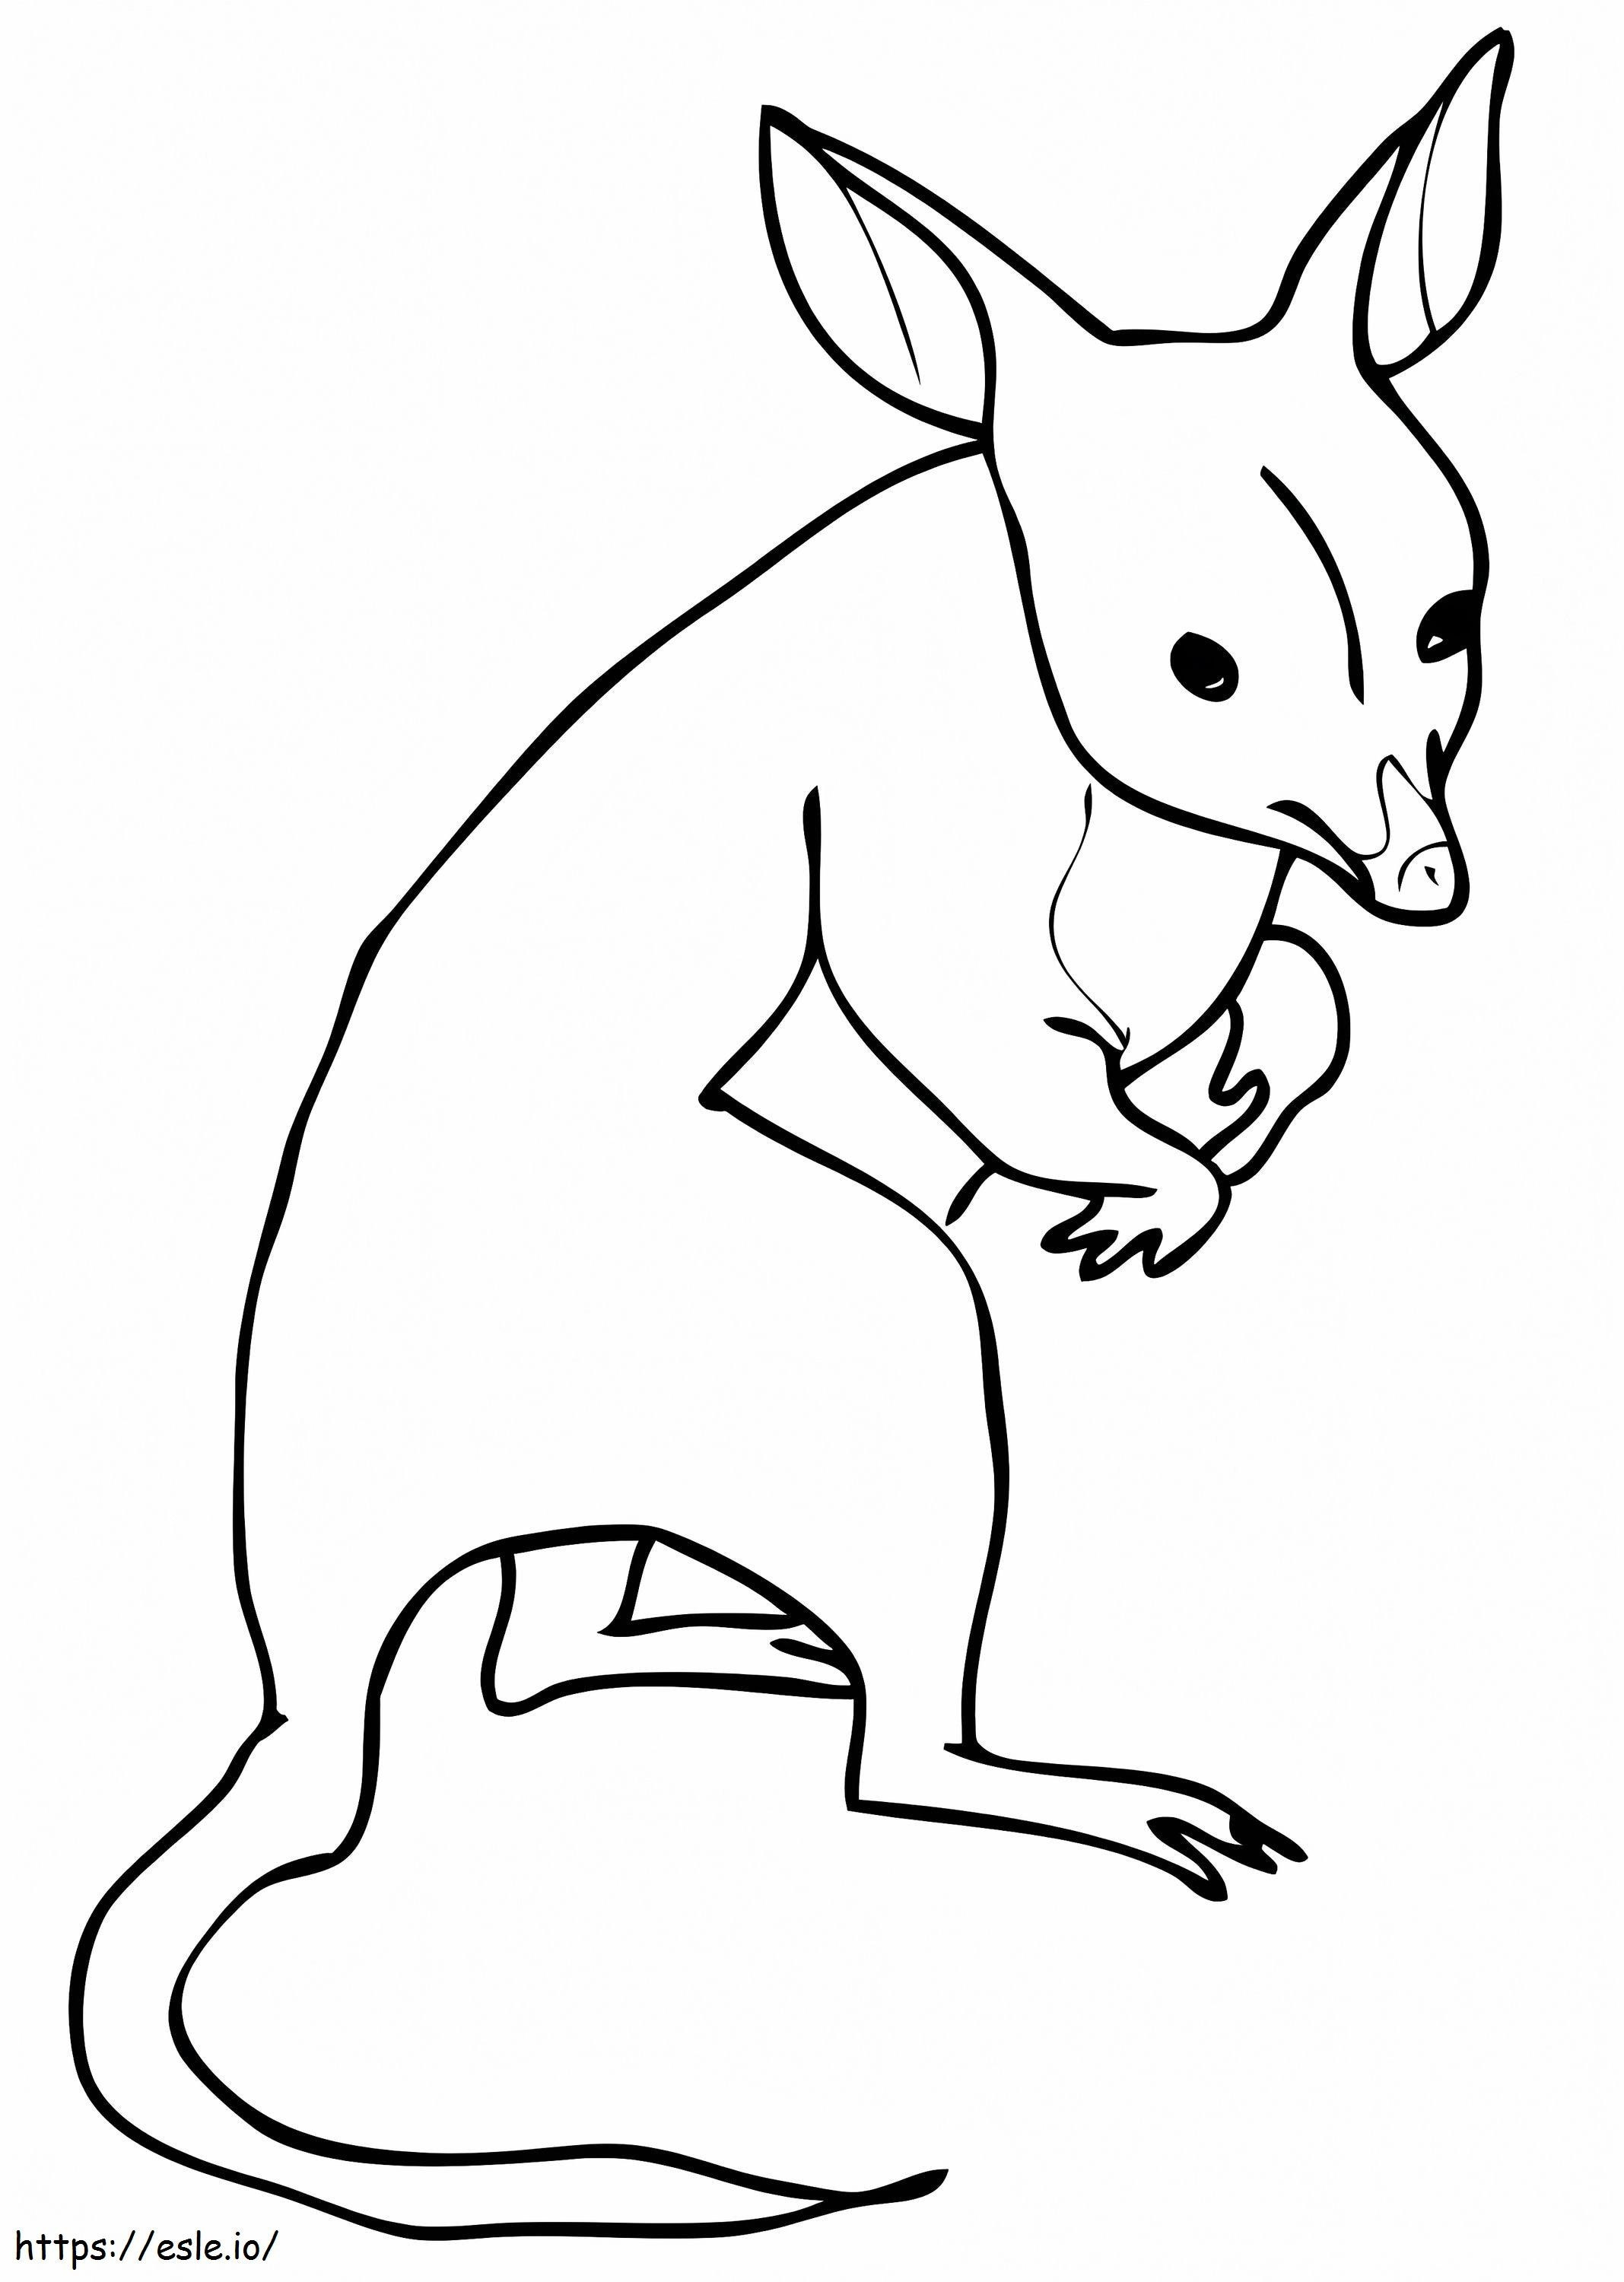 Avustralya Bandicoot boyama